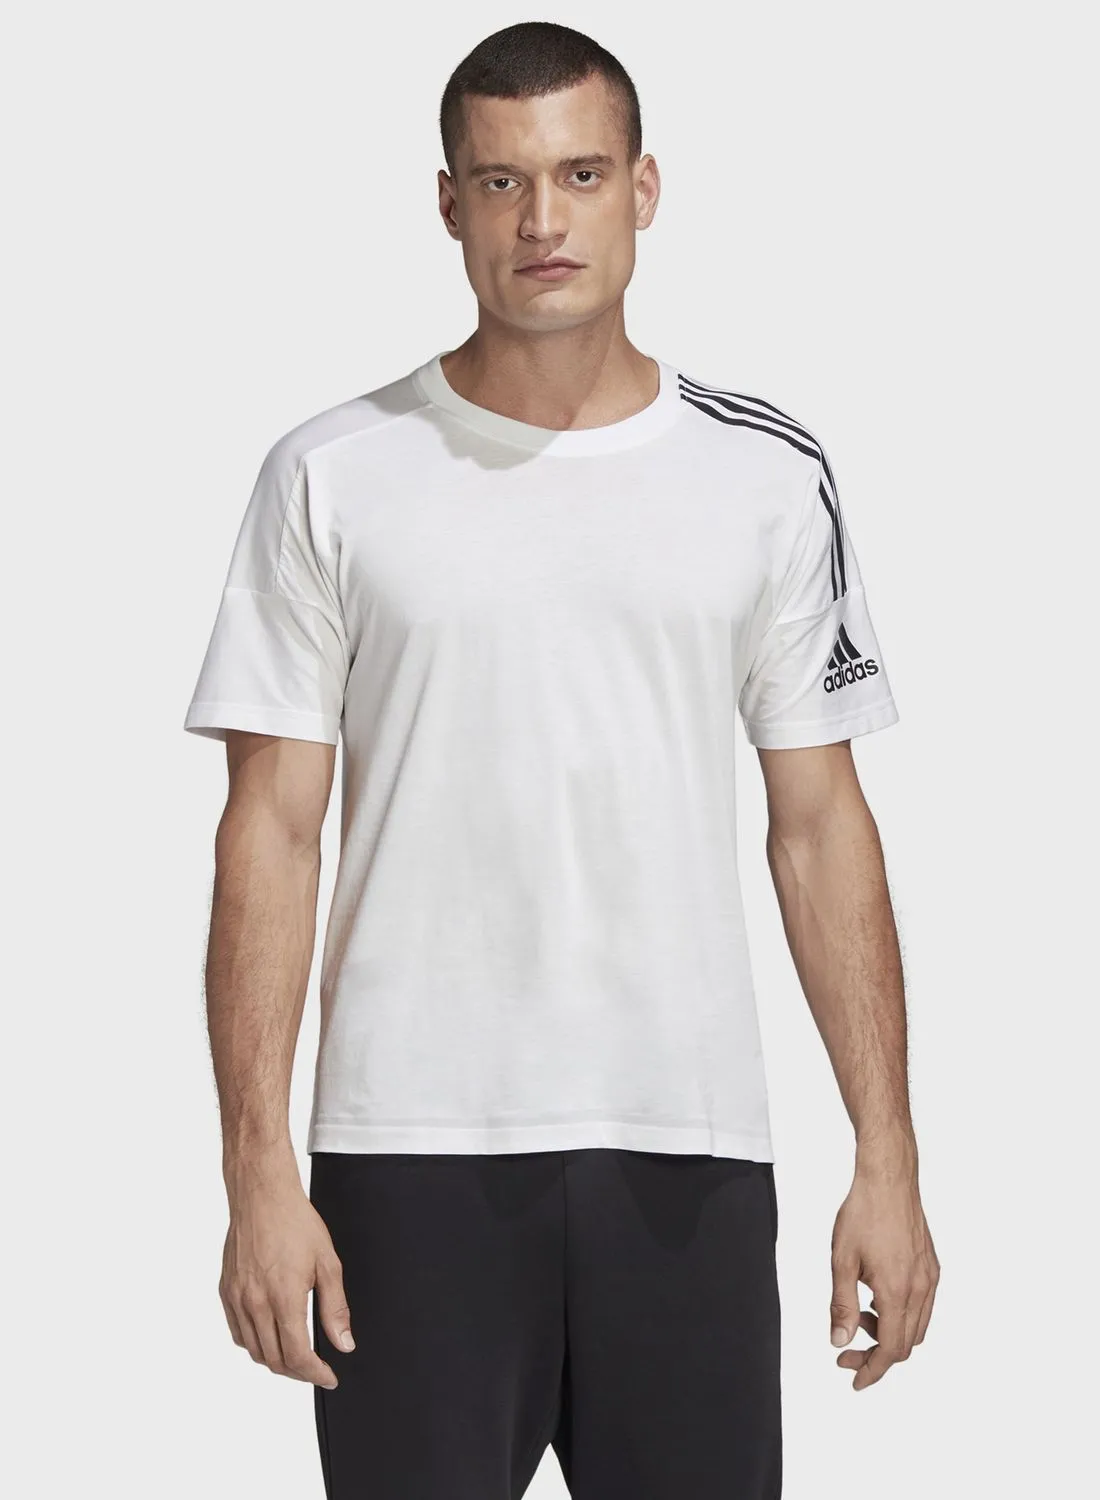 Adidas Z.N.E. 3 Stripe T-Shirt